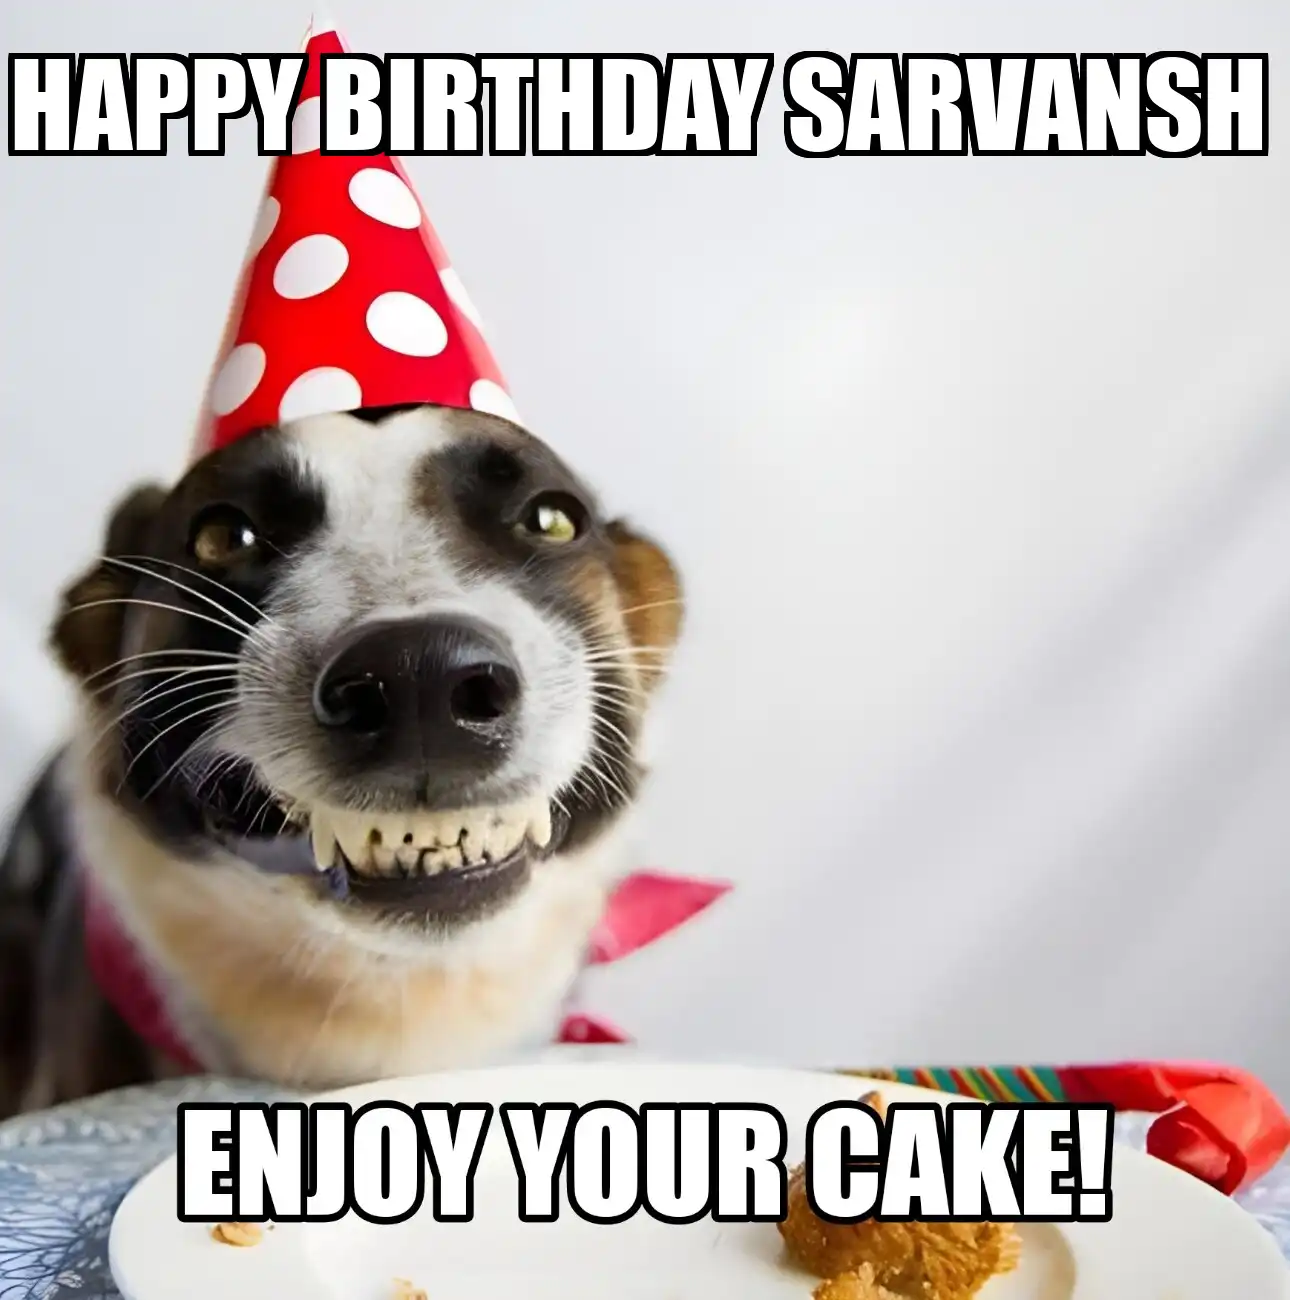 Happy Birthday Sarvansh Enjoy Your Cake Dog Meme